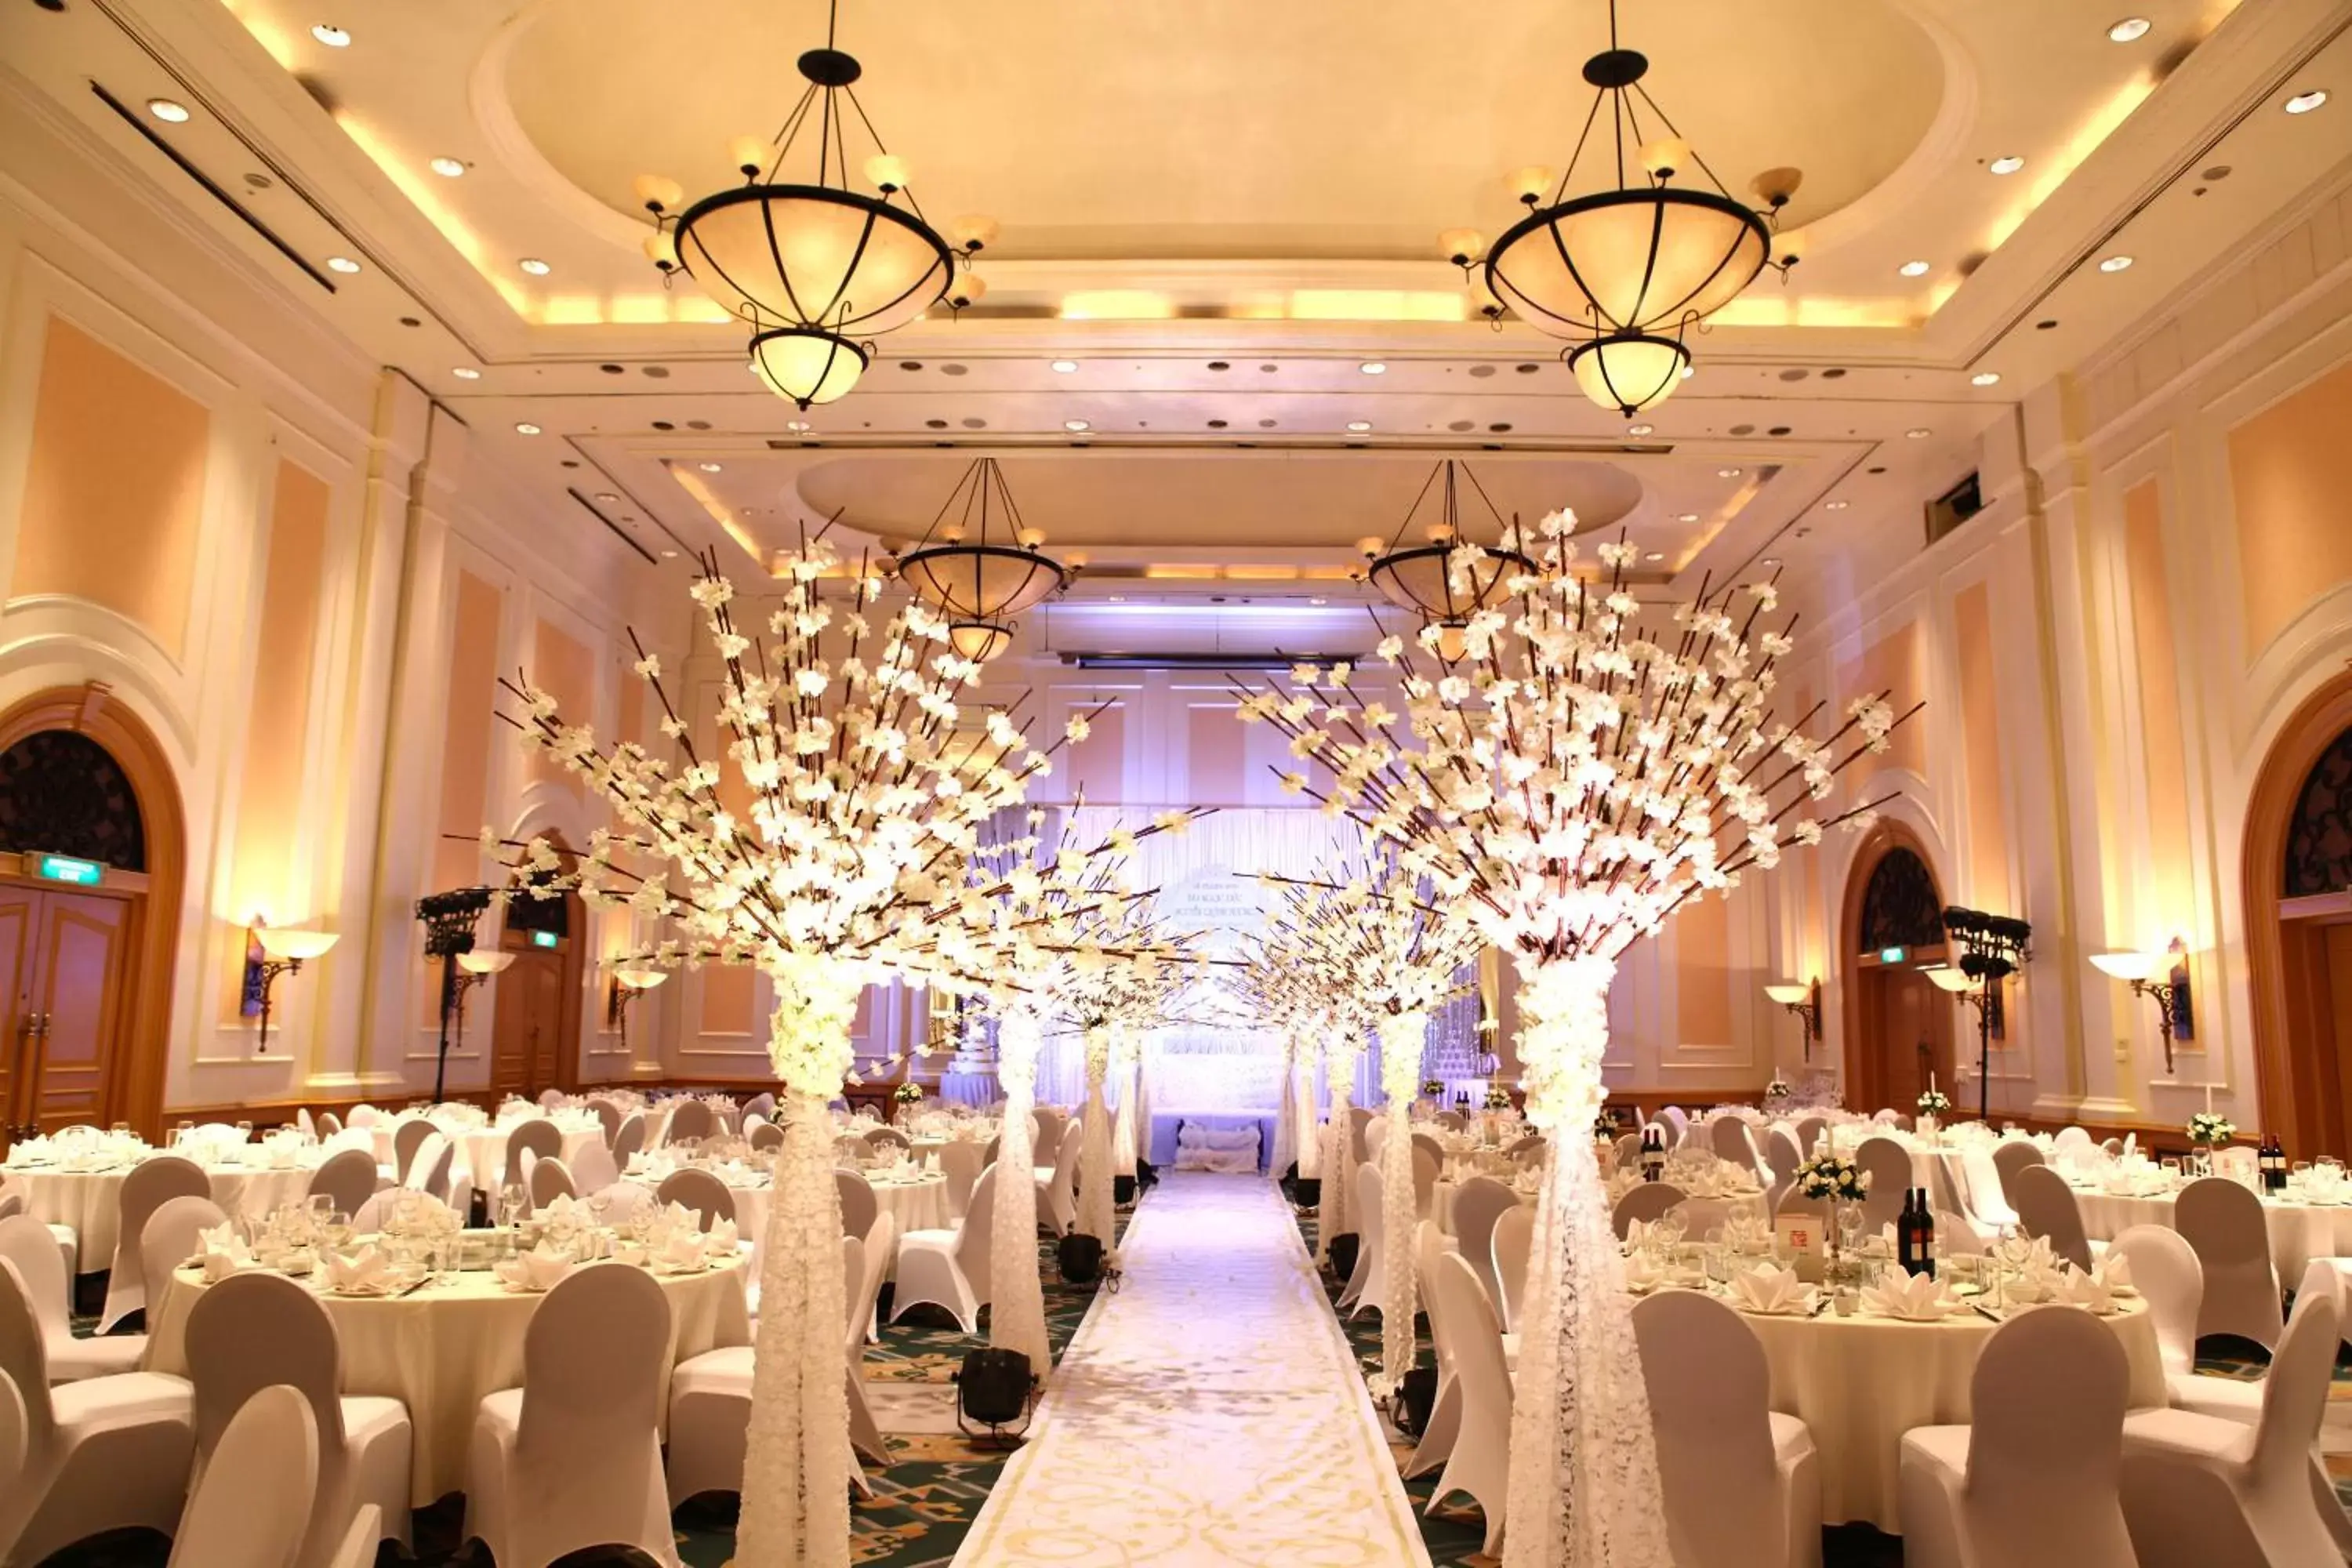 Banquet/Function facilities, Banquet Facilities in Hanoi Daewoo Hotel